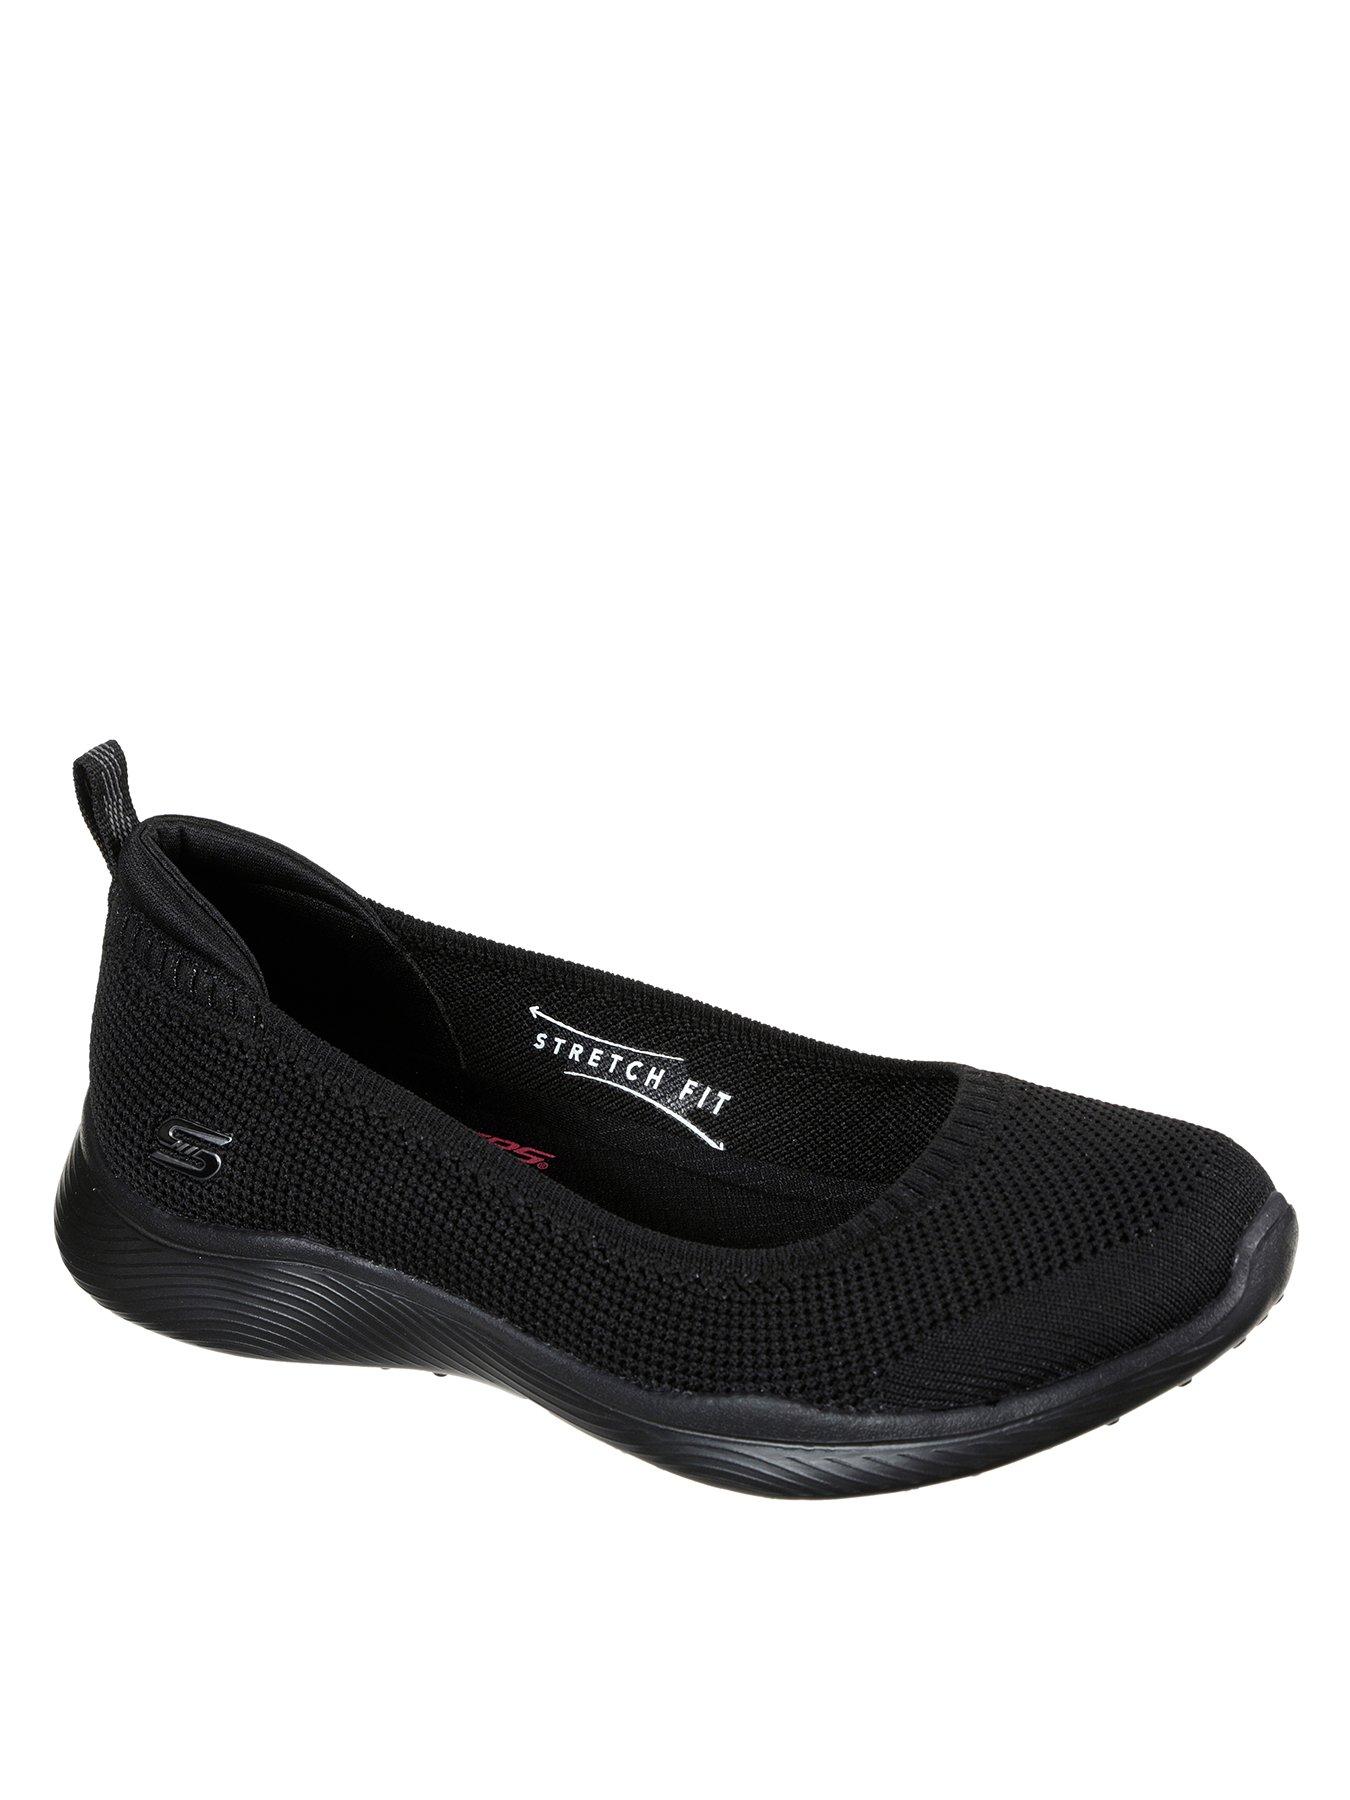 Skechers Microburst 2.0 Wide Fit Ballerina Shoes - Black, Black, Size 6, Women